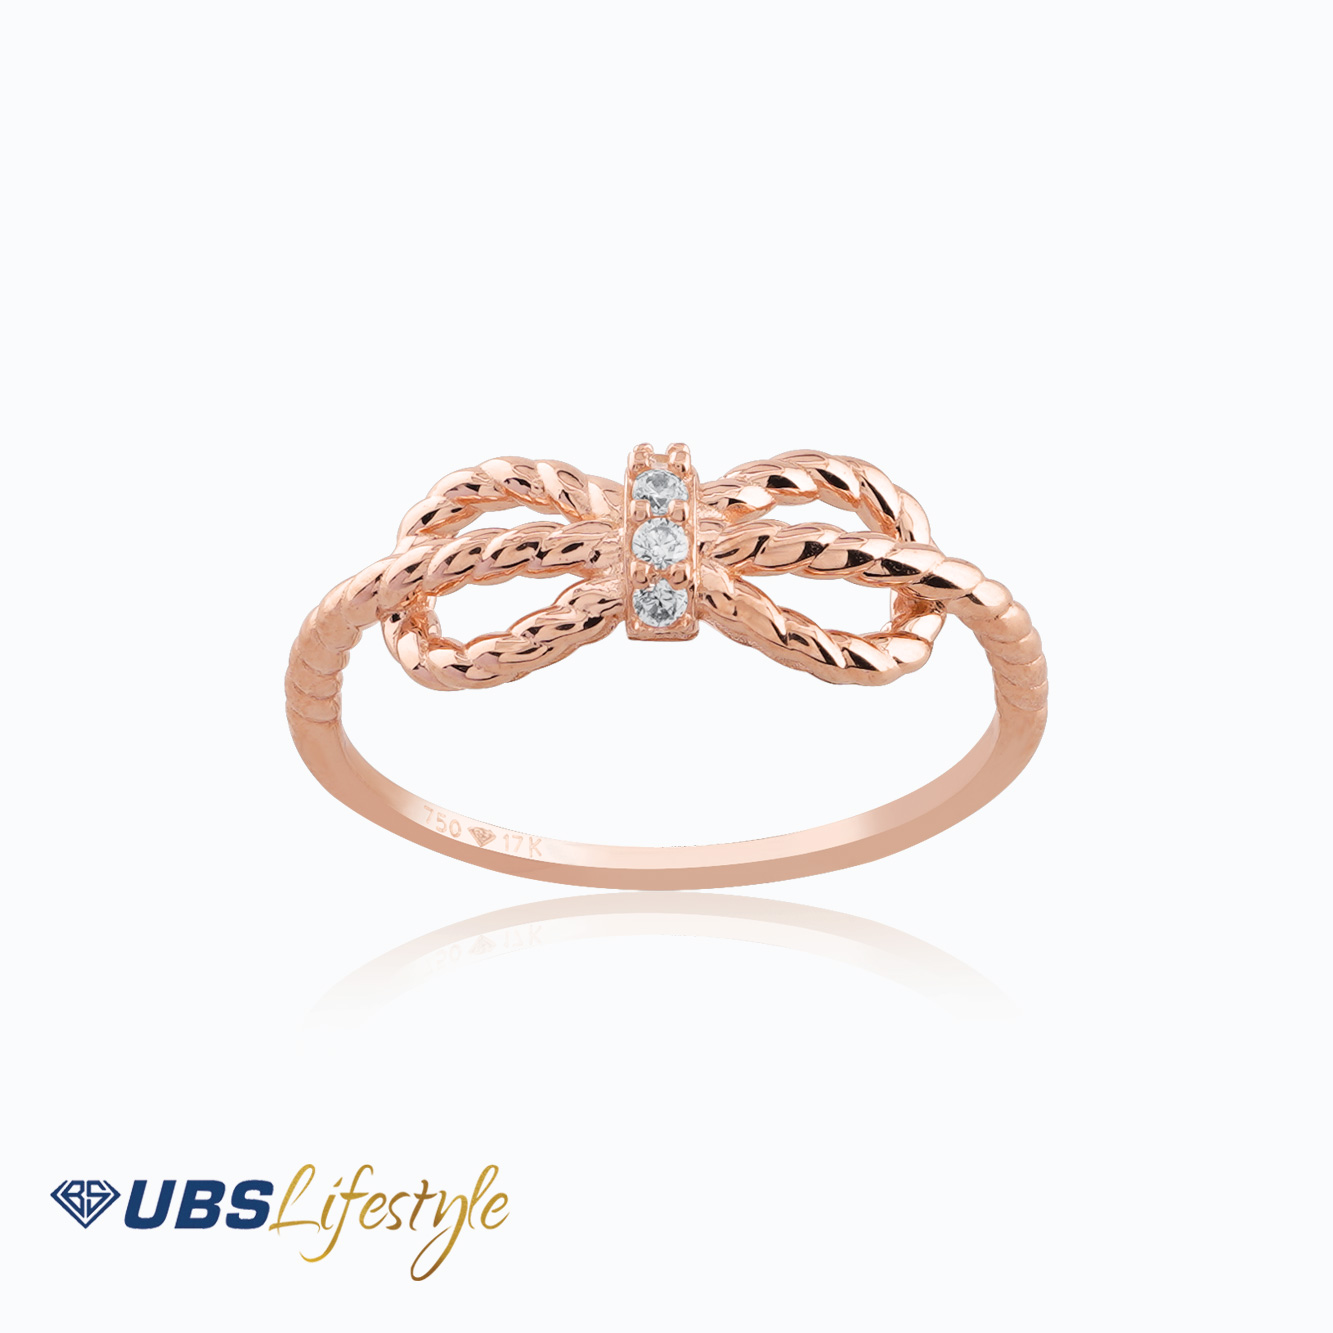 UBS Cincin Emas Knot - Ksc0859R - 17K